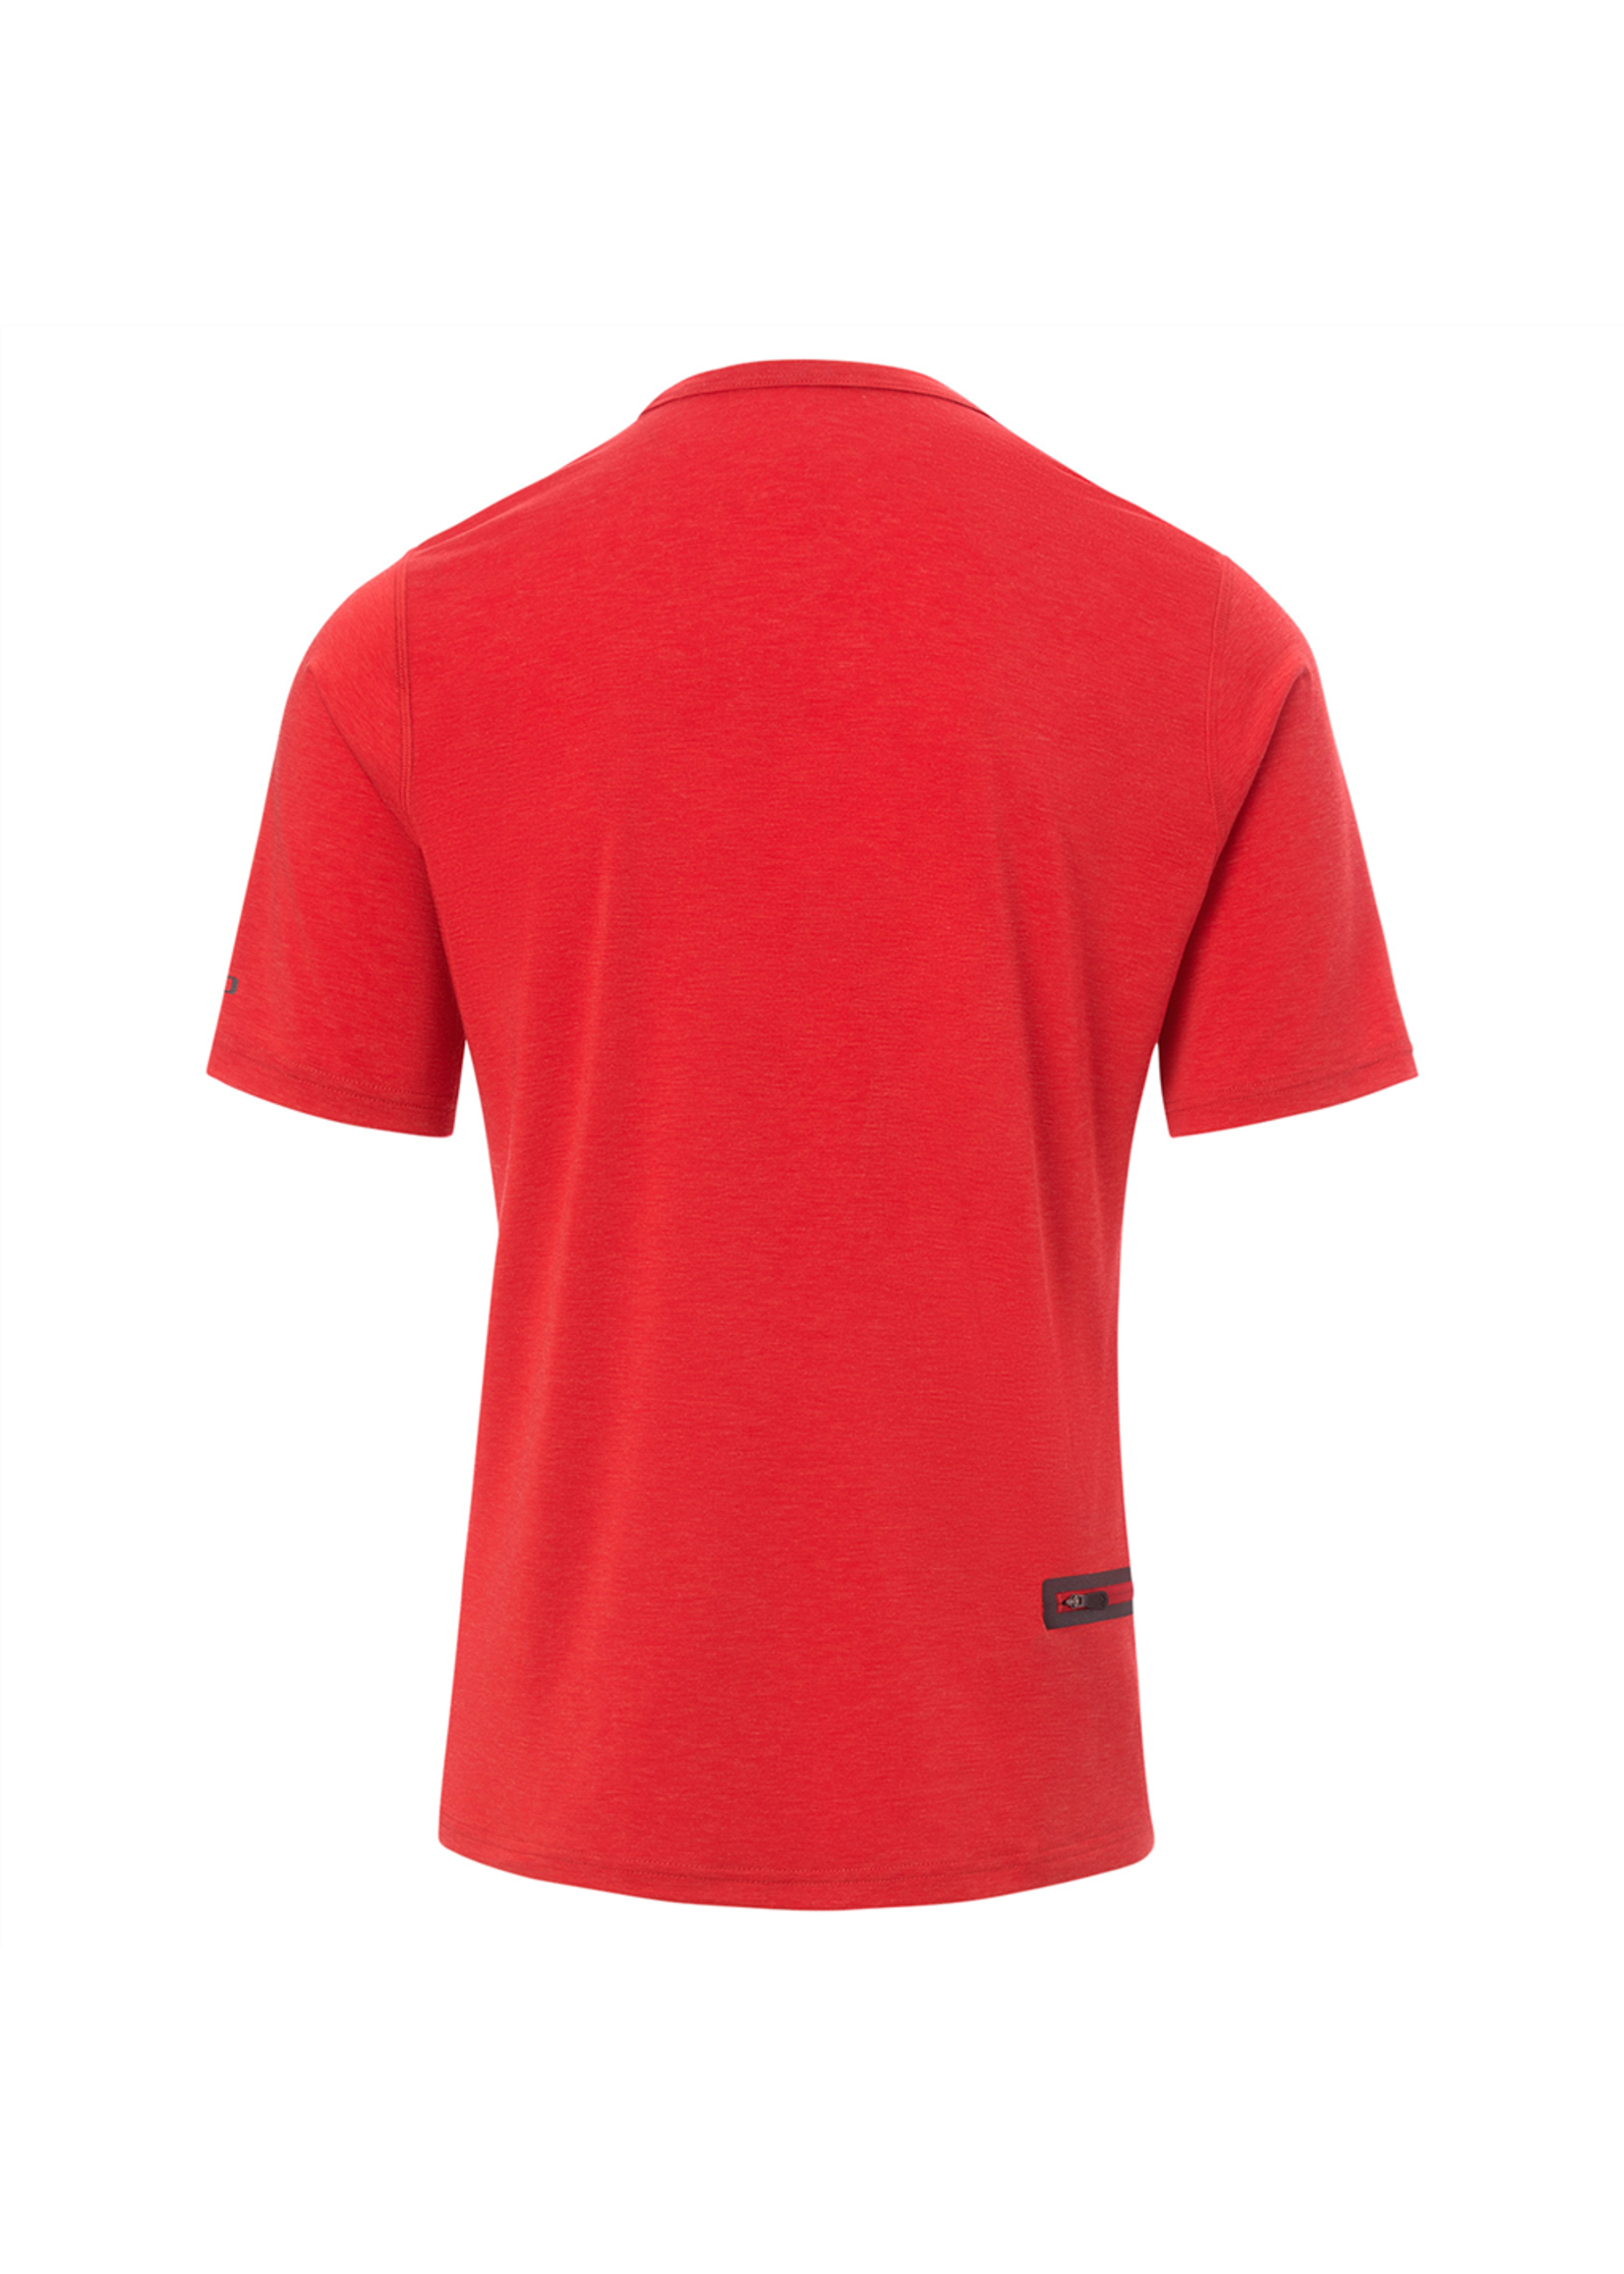 Giro Cycling T-Shirt Venture Roust Jersey - Ginja red